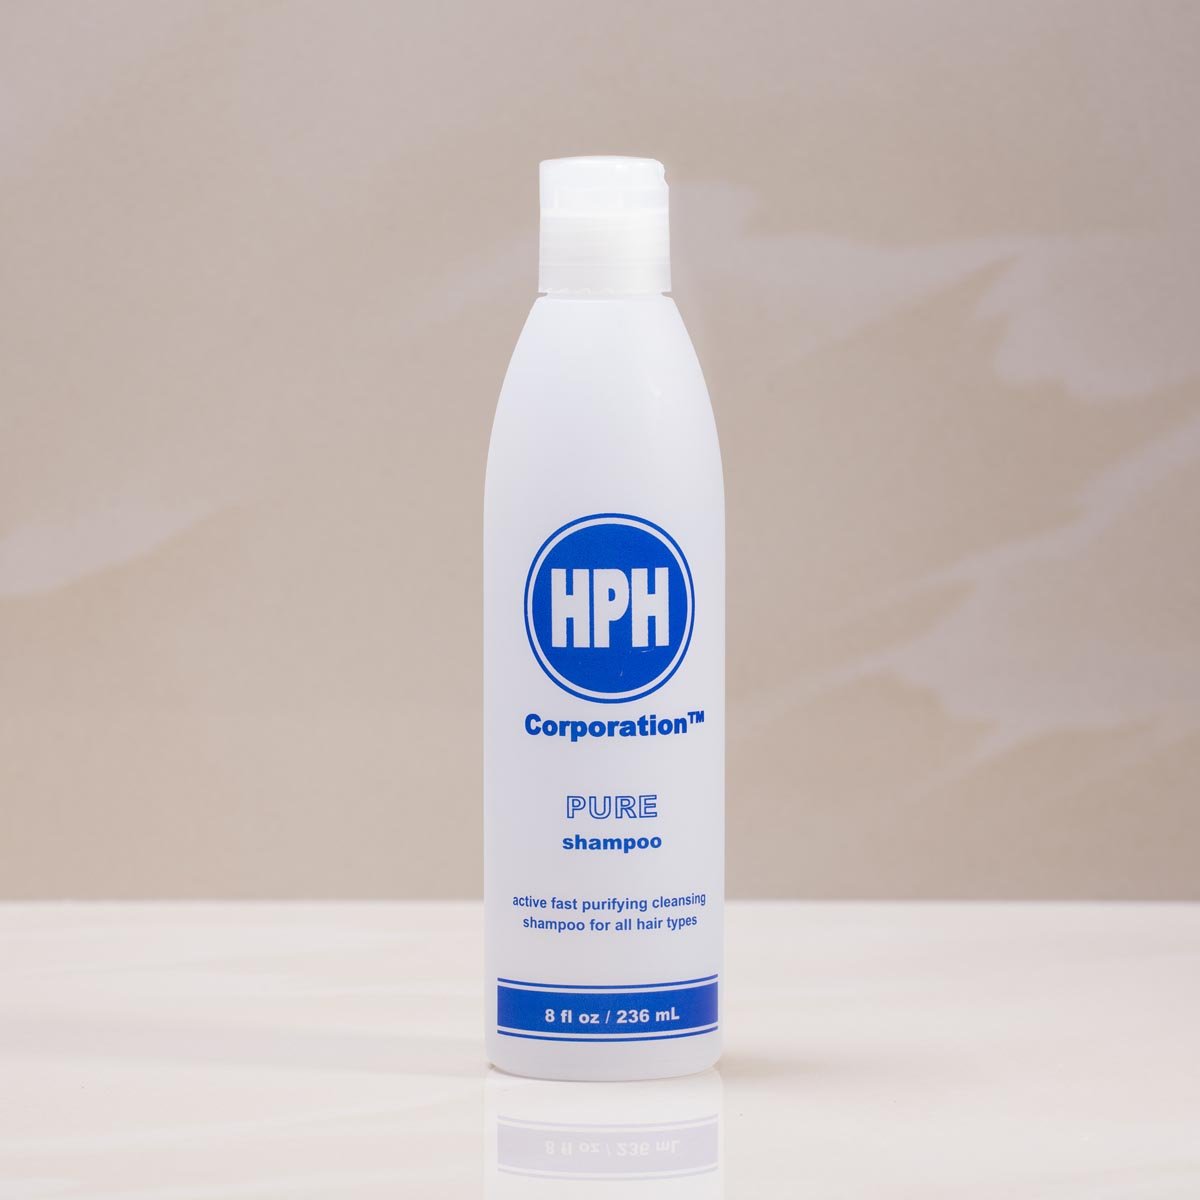 NOTape Silicone Bonding Glue – BodoUSA - HPH Corporation